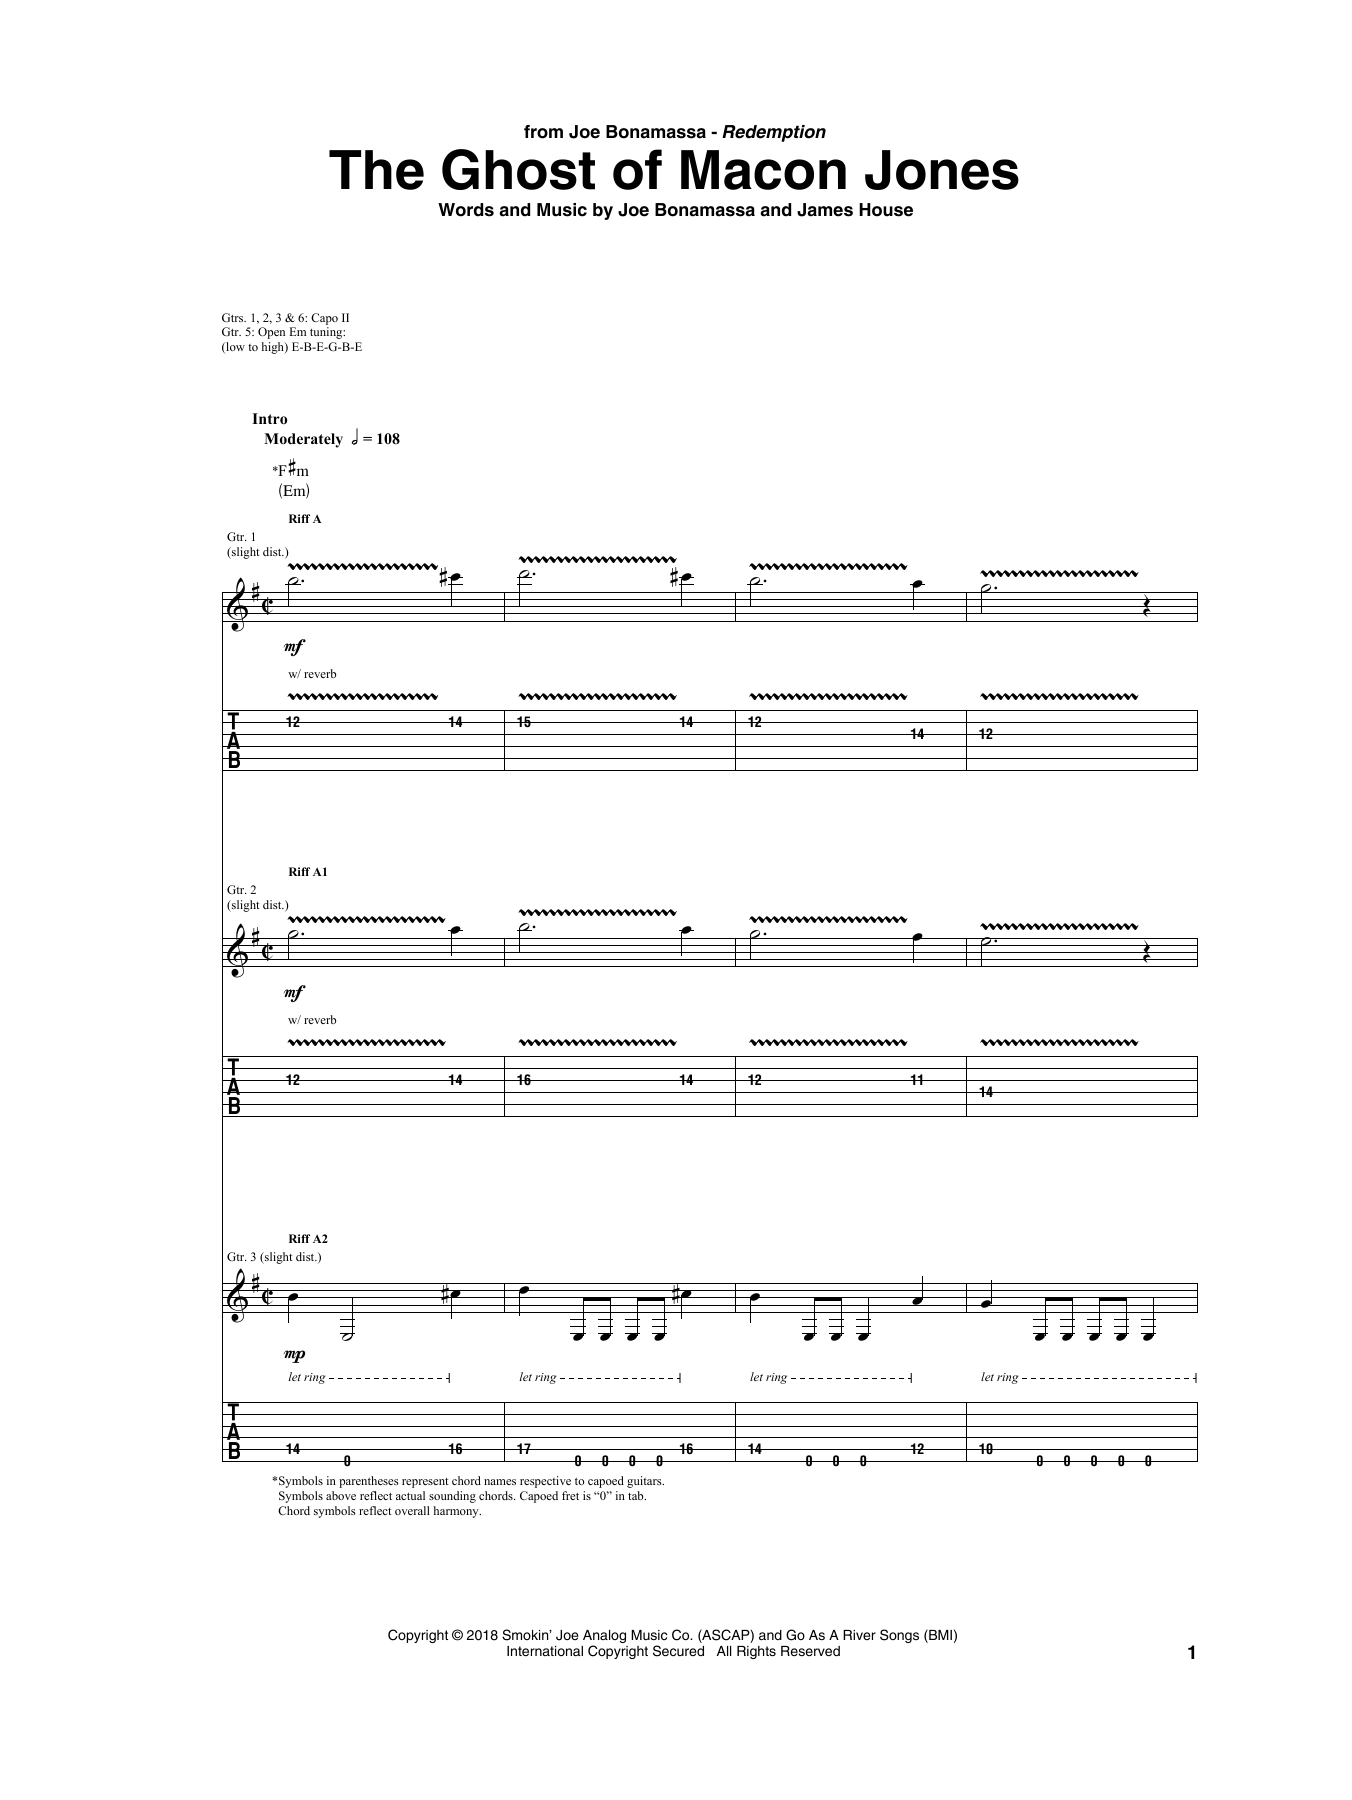 Joe Bonamassa The Ghost Of Macon Jones Sheet Music Notes & Chords for Guitar Tab - Download or Print PDF